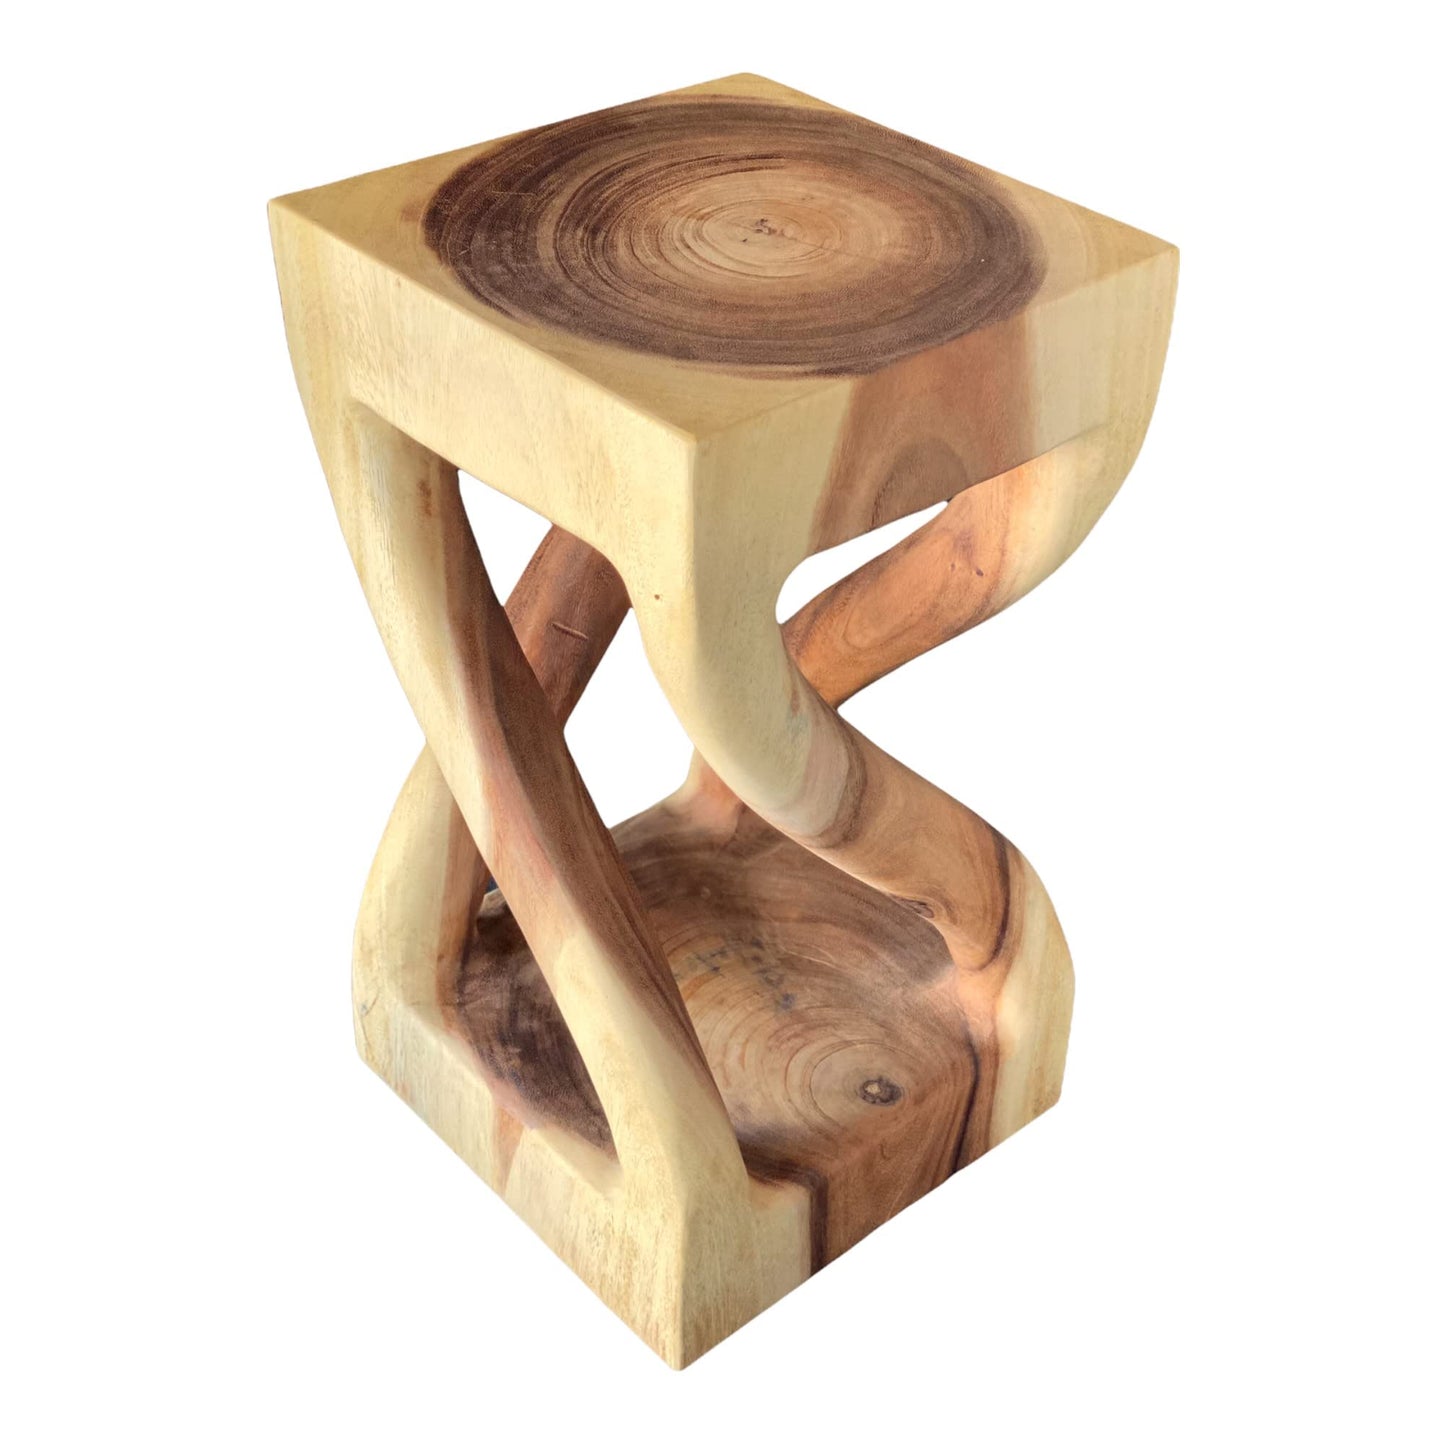 Holz Beistelltisch - Holzhocker Couchtisch - Handgefertigt - Gedreht aus hellen massivem Suarholz - 50x28x28 cm